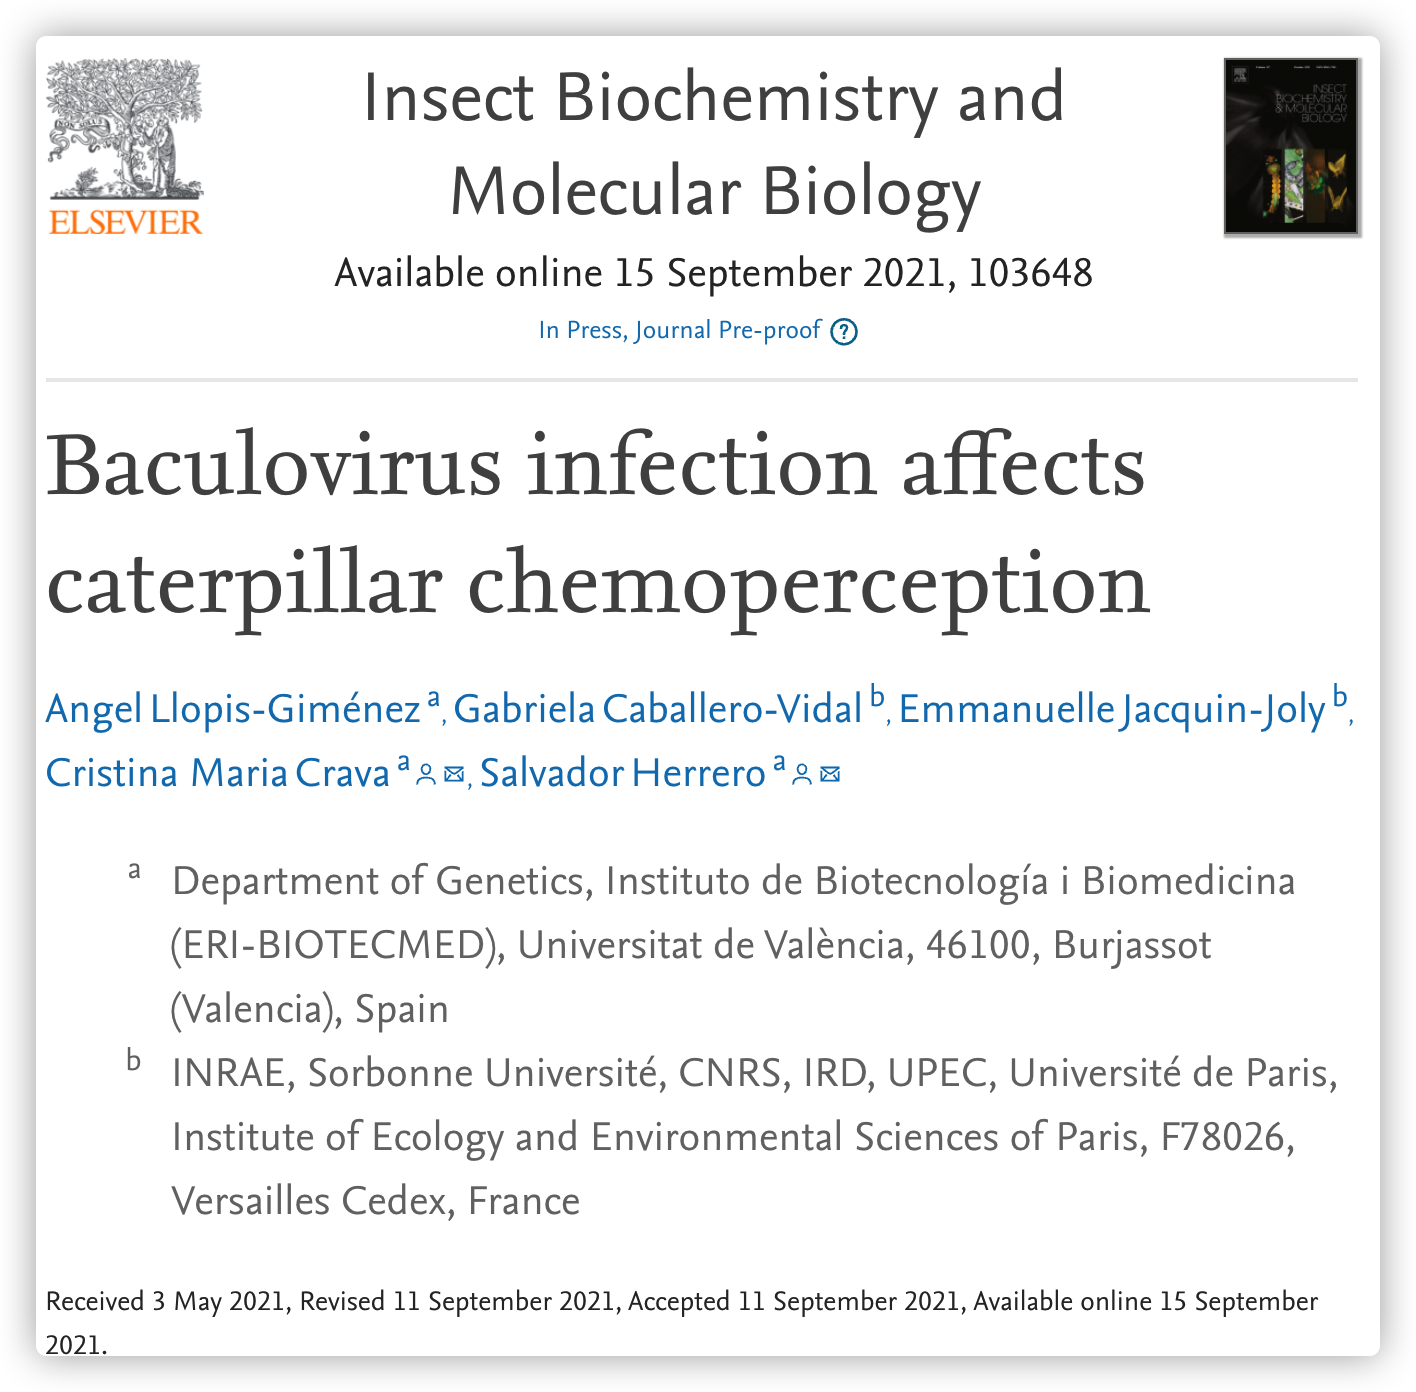 Baculovirus infection affects caterpillar chemoperception